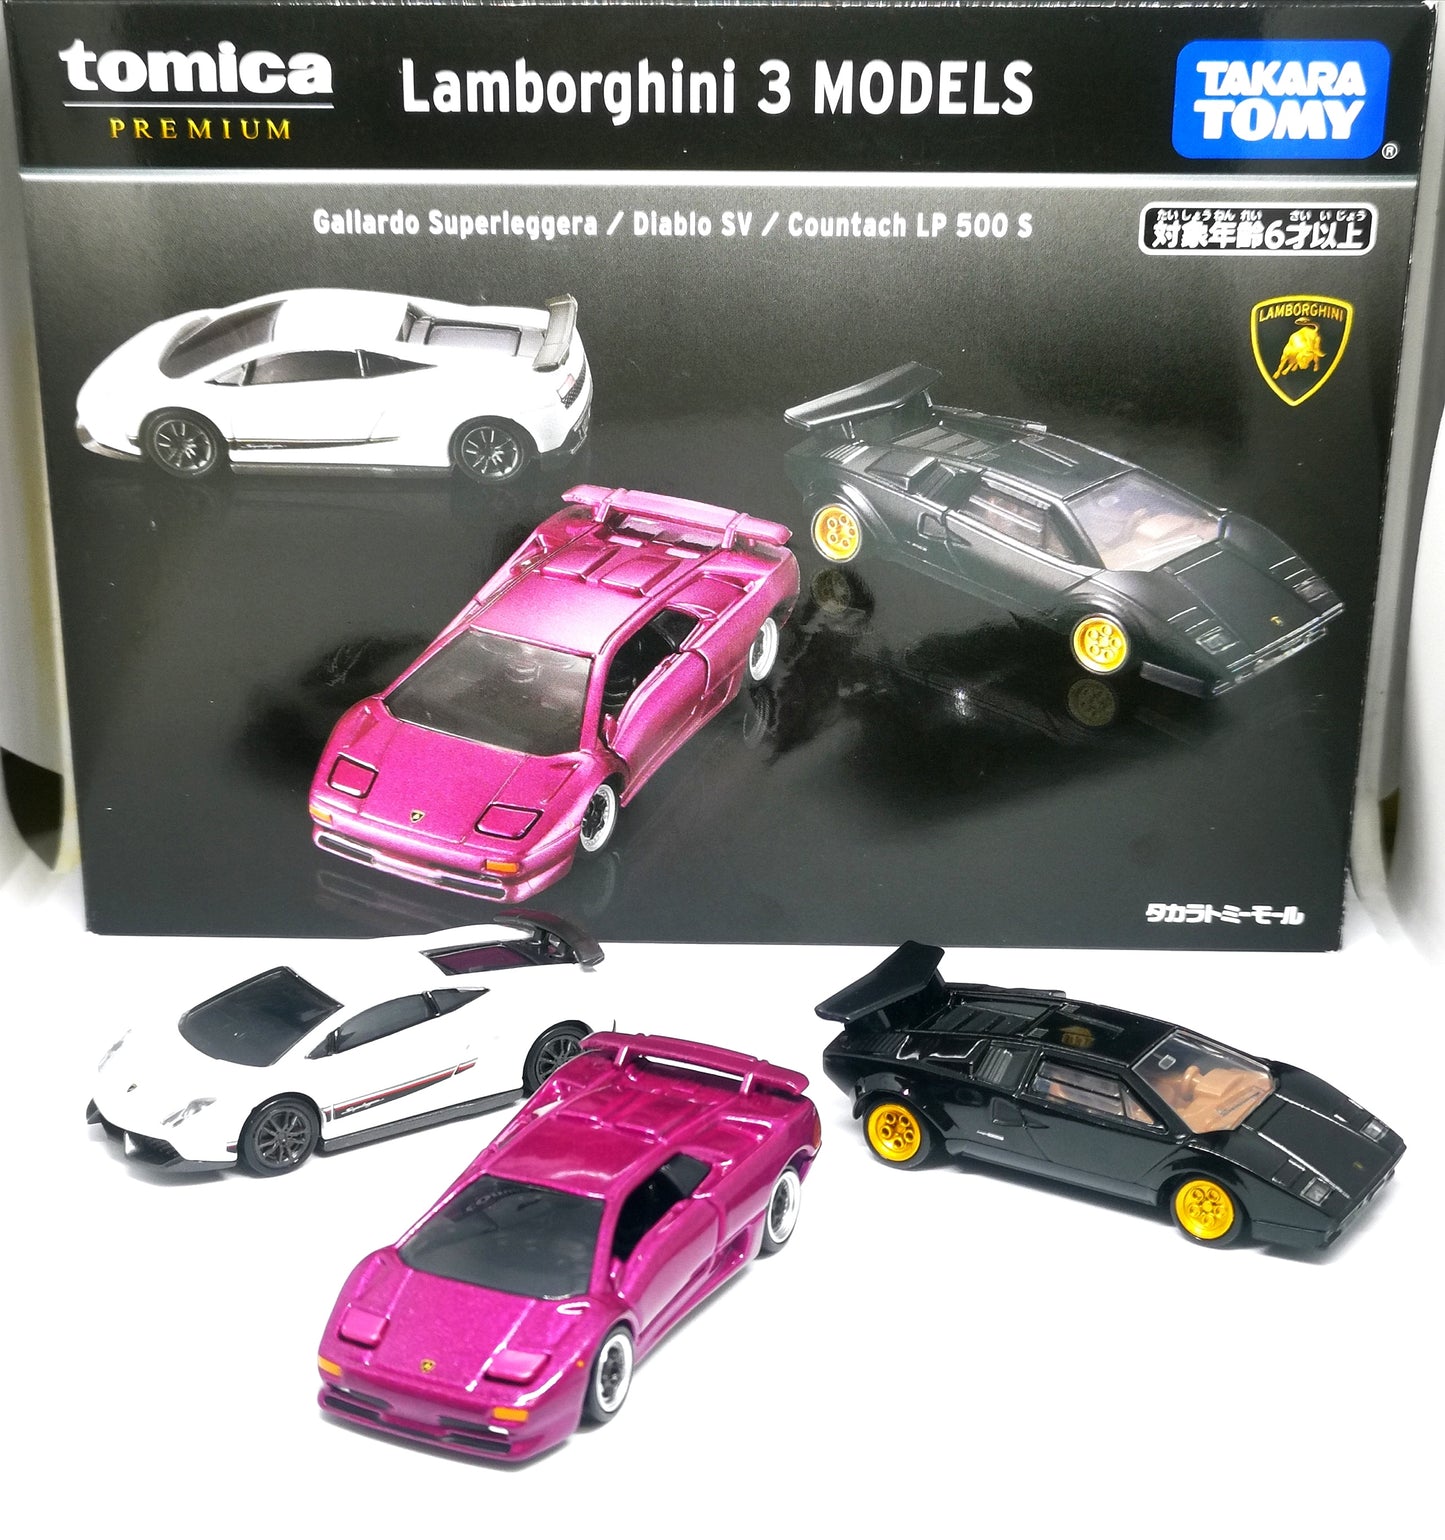 Tomica Premium Exclusive Lamborghini 3 Model Gallardo Super Leggera/ Diablo SV/ Countach LP500s Takara Tomy